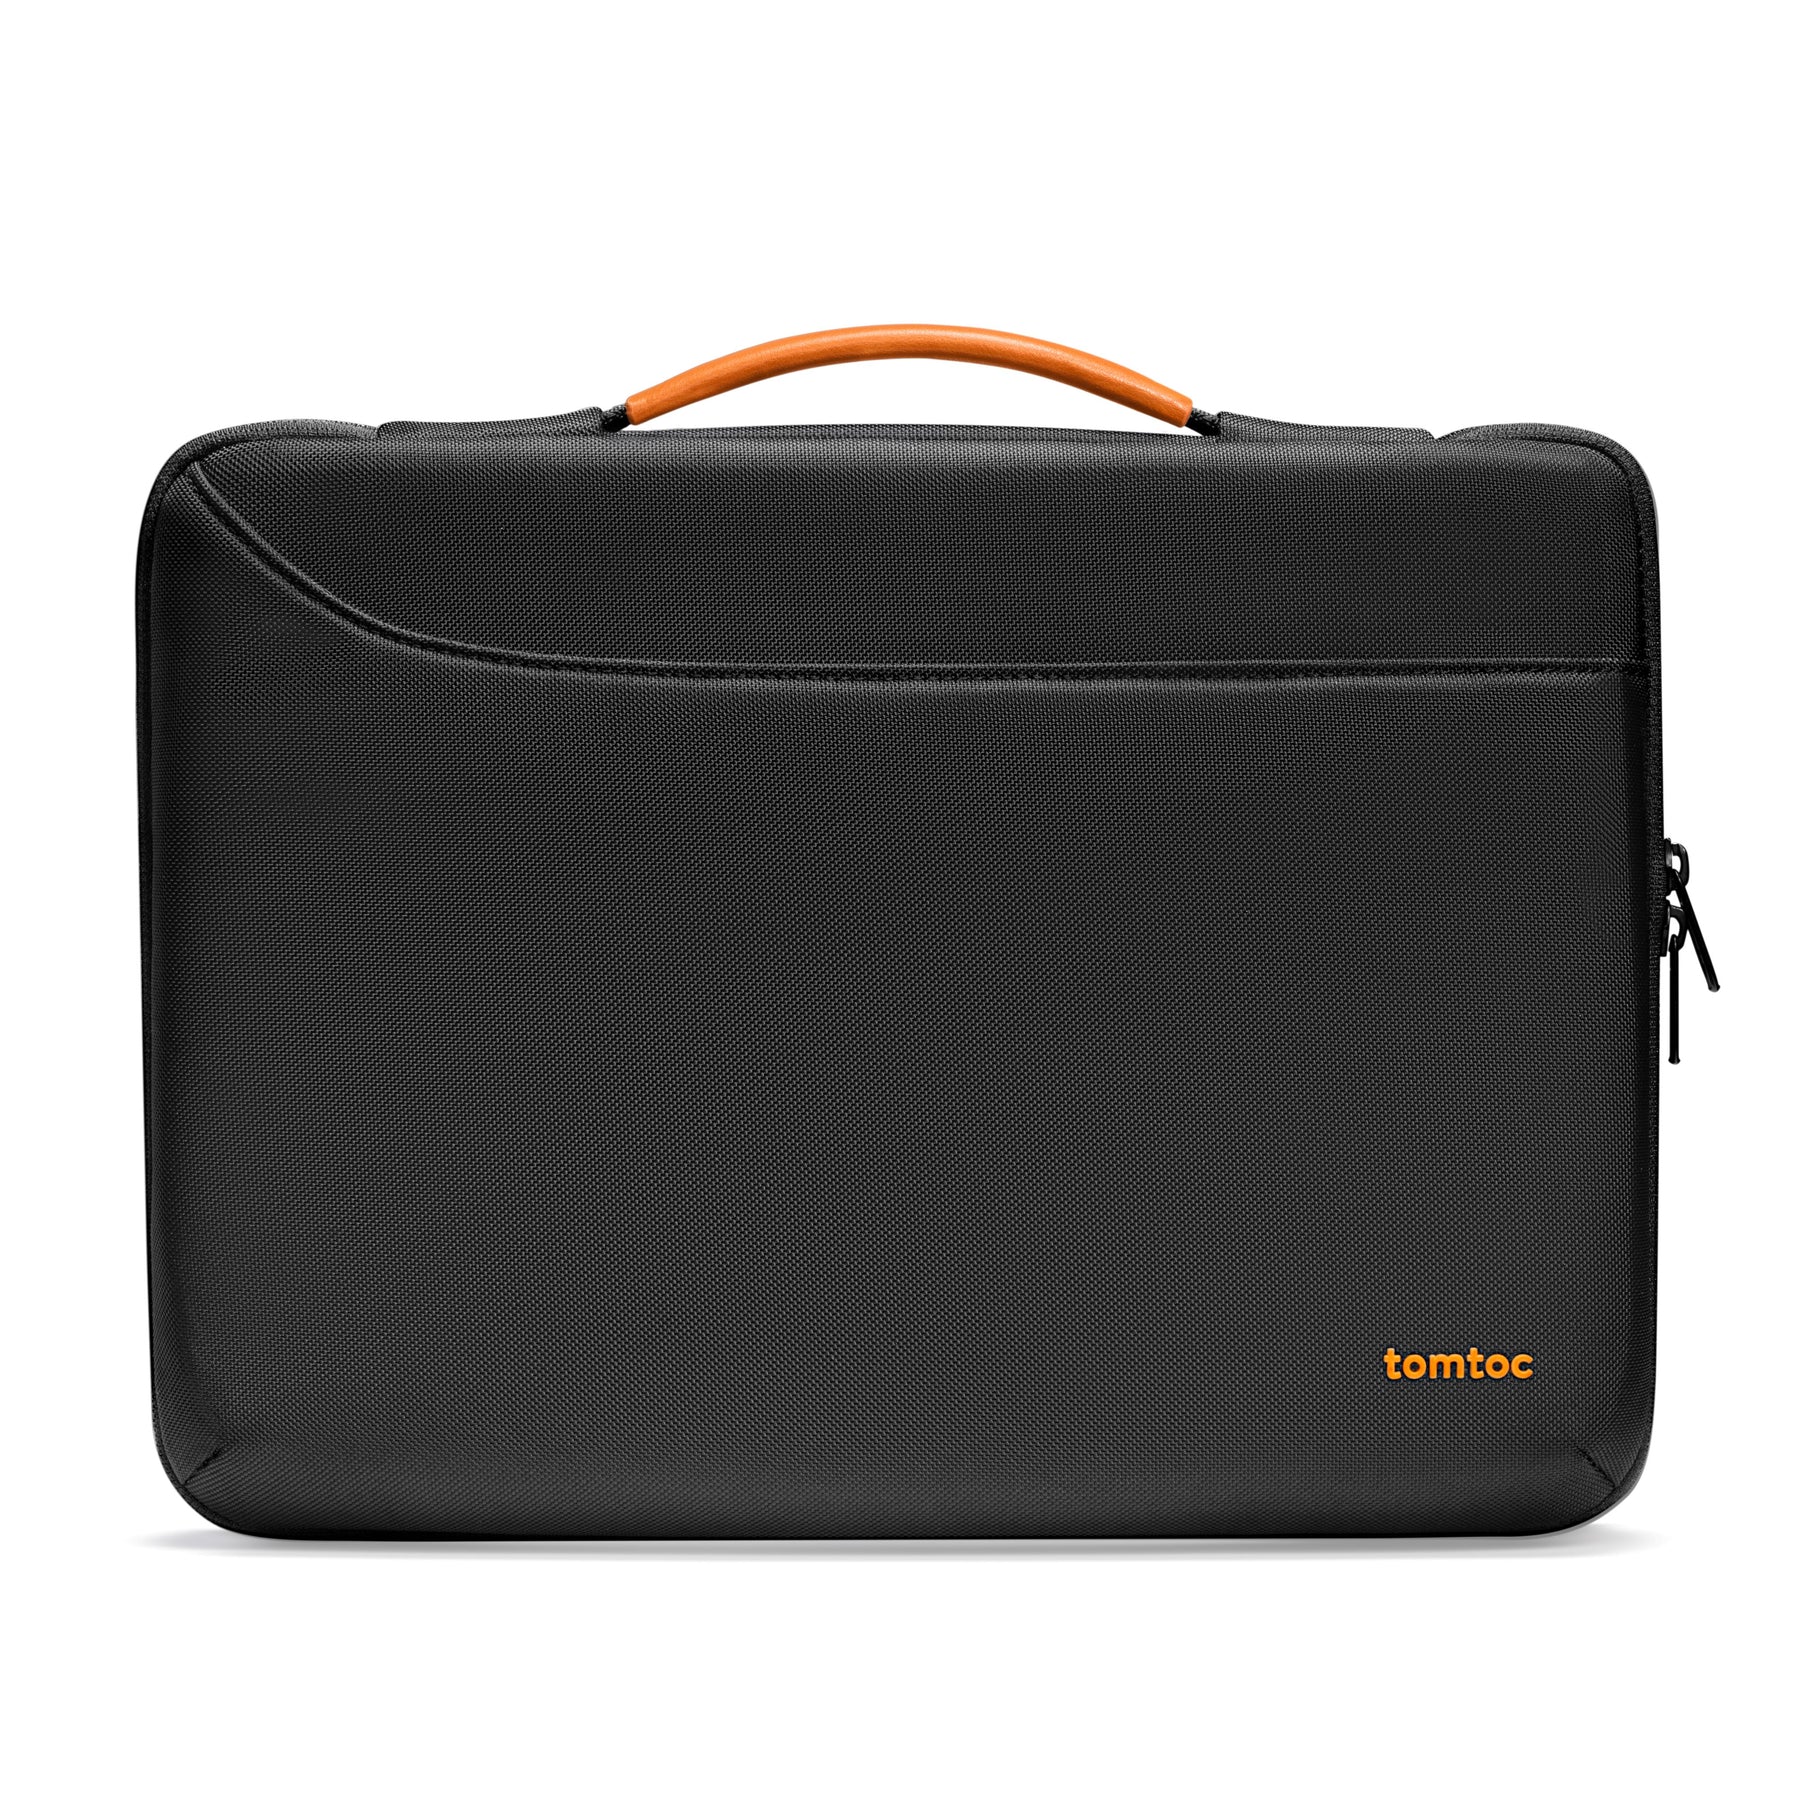 Defender-A22 Laptop Handbag 15-inch